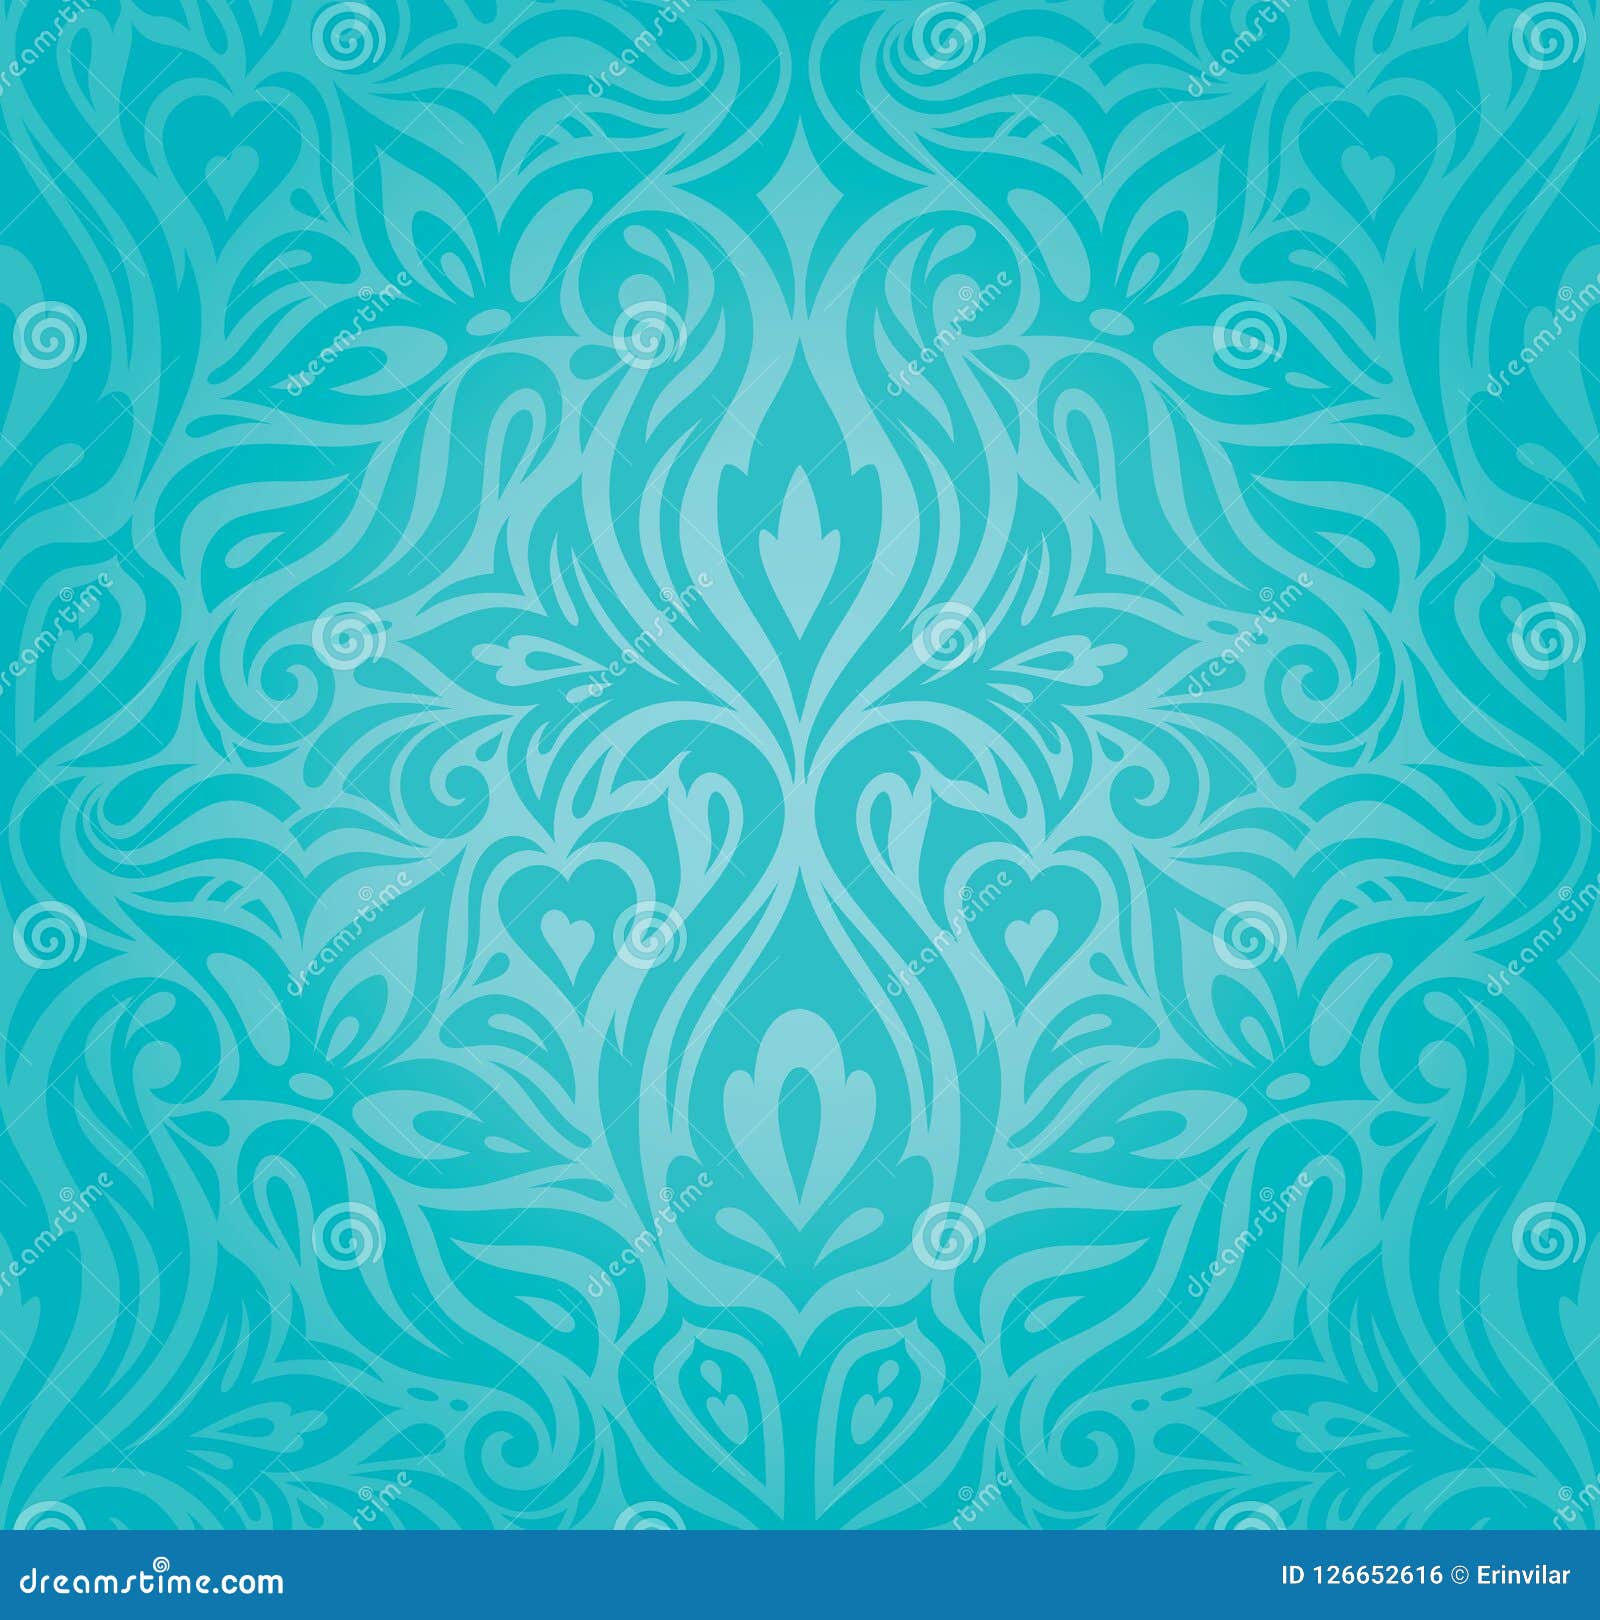 Turquoise Floral Holiday Vintage Background Wallpaper Green Blue Fashion  Design Stock Vector - Illustration of elegant, invitation: 126652616